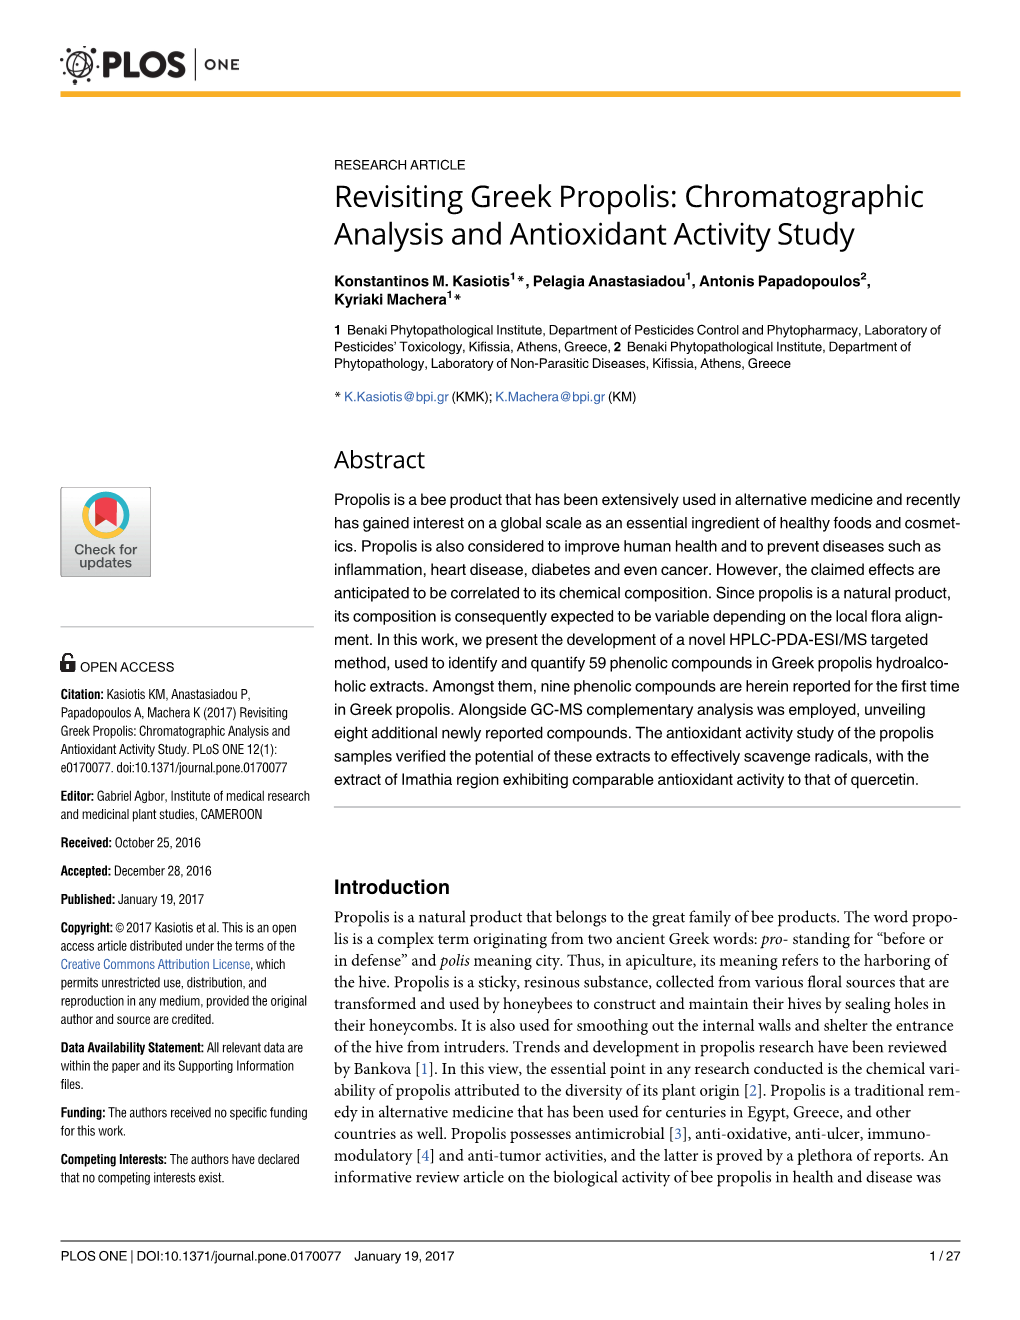 Revisiting Greek Propolis: Chromatographic Analysis and Antioxidant Activity Study